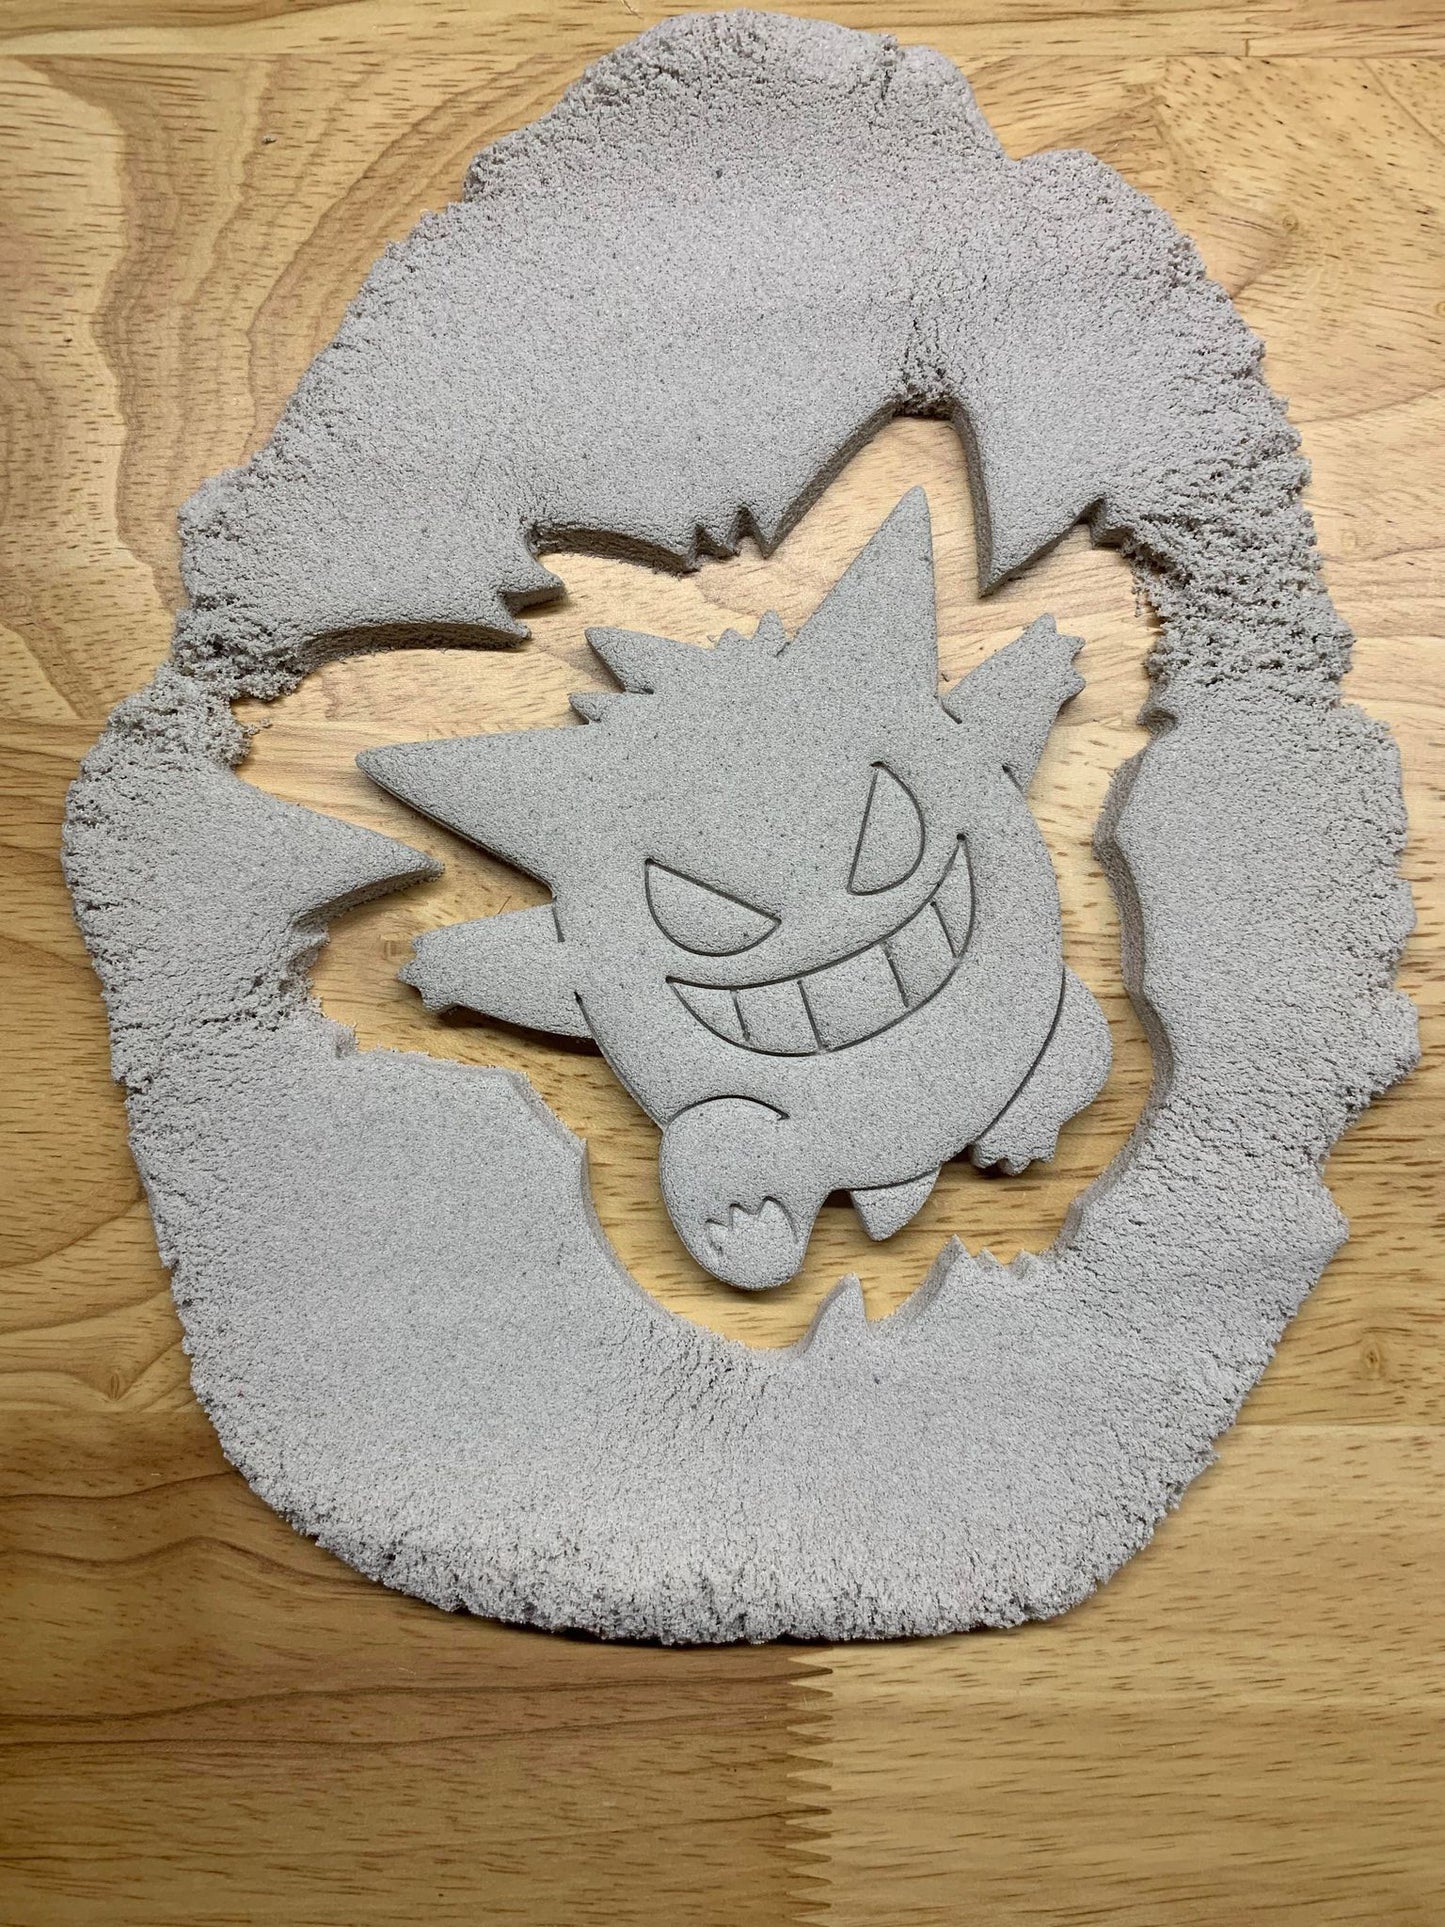 Gengar Pokemon Inspired Cookie Cutter | Senac LLC | polymer clay dough cutter clay shape jewelry cutters